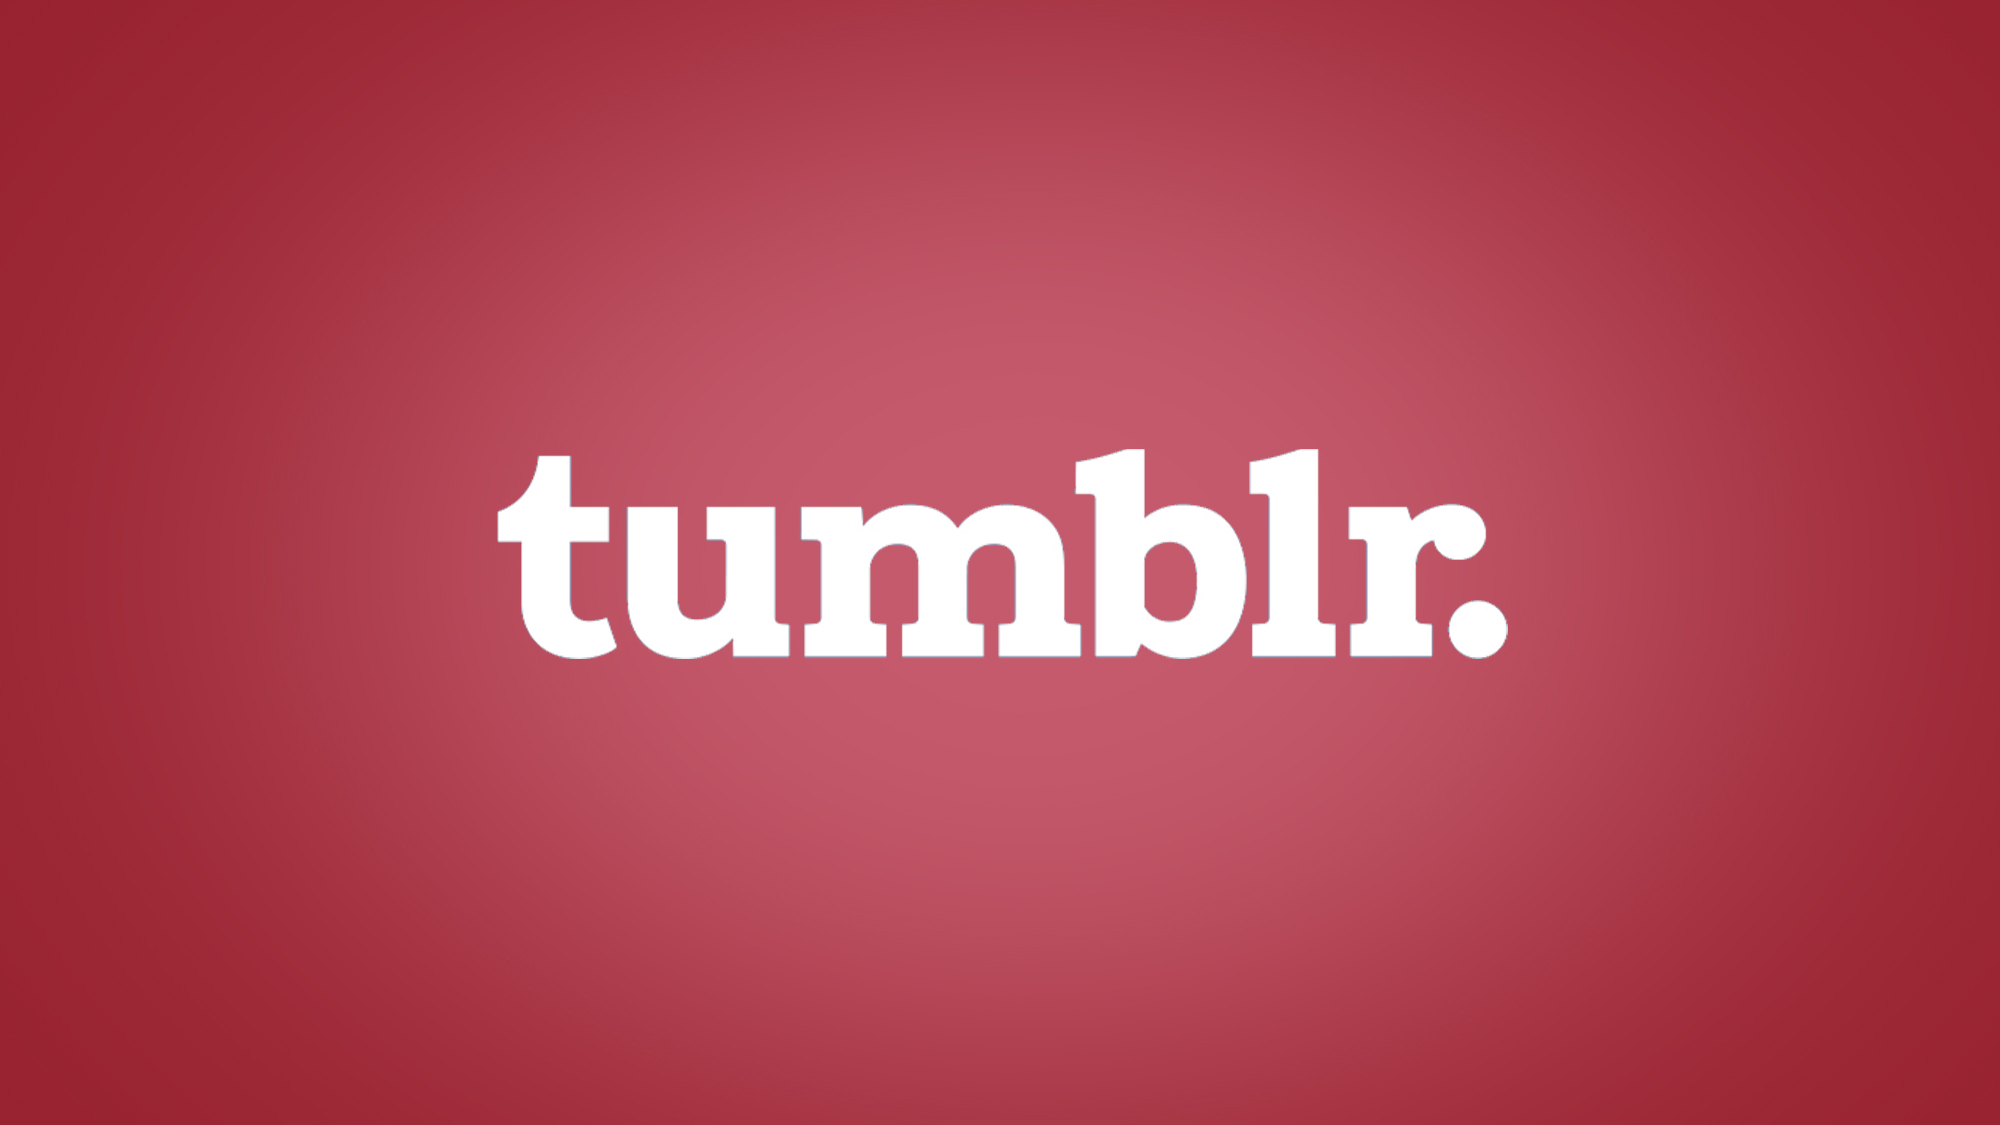 tumblr logo